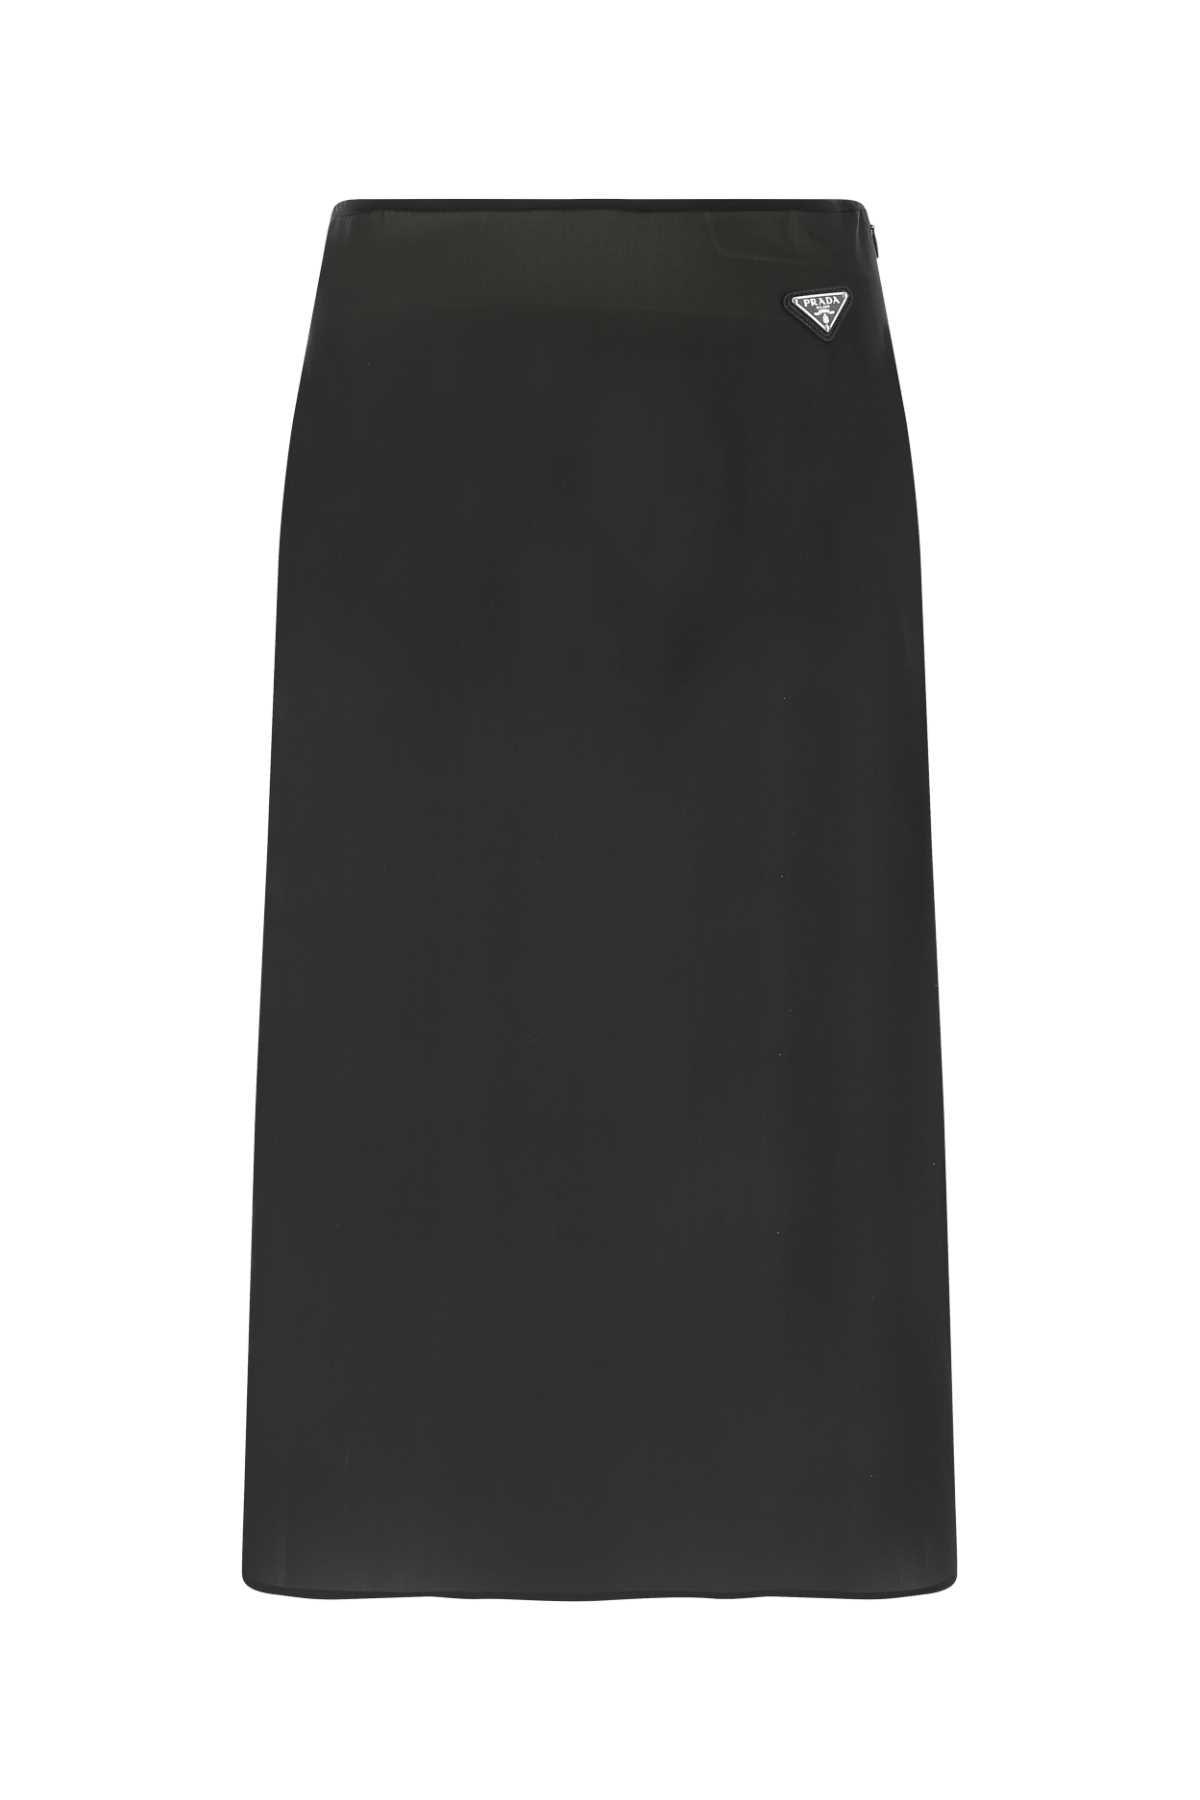 Prada High Waist A-line Midi Skirt